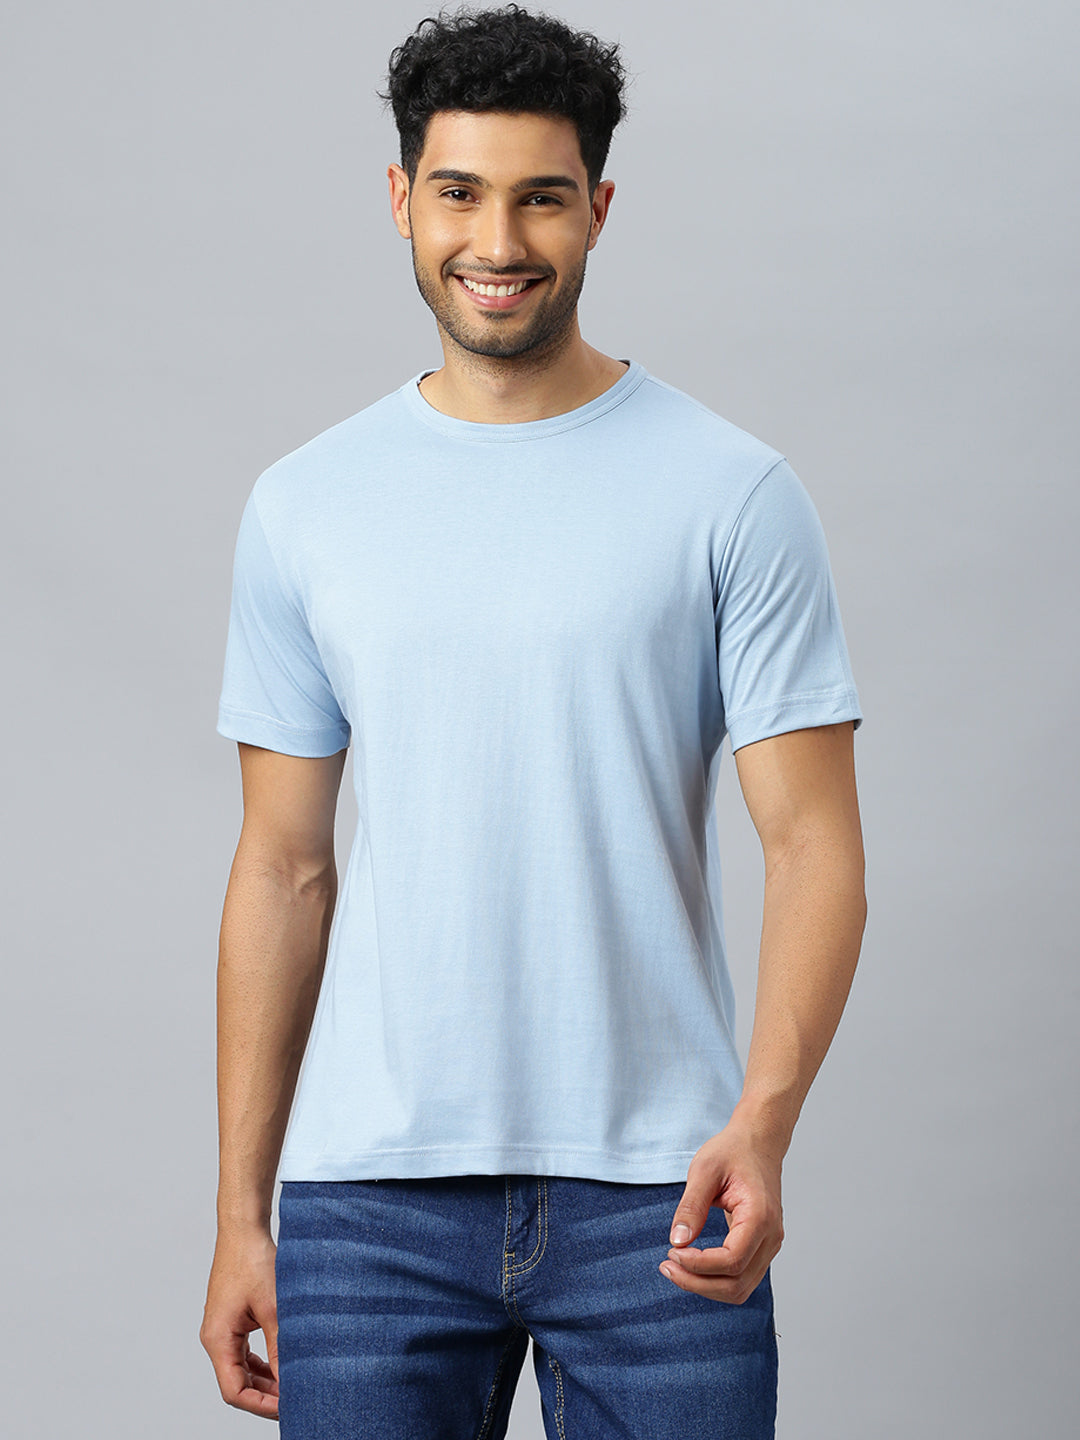 Don Vino Men's Solid Florentine Blue Crew Neck T-Shirt